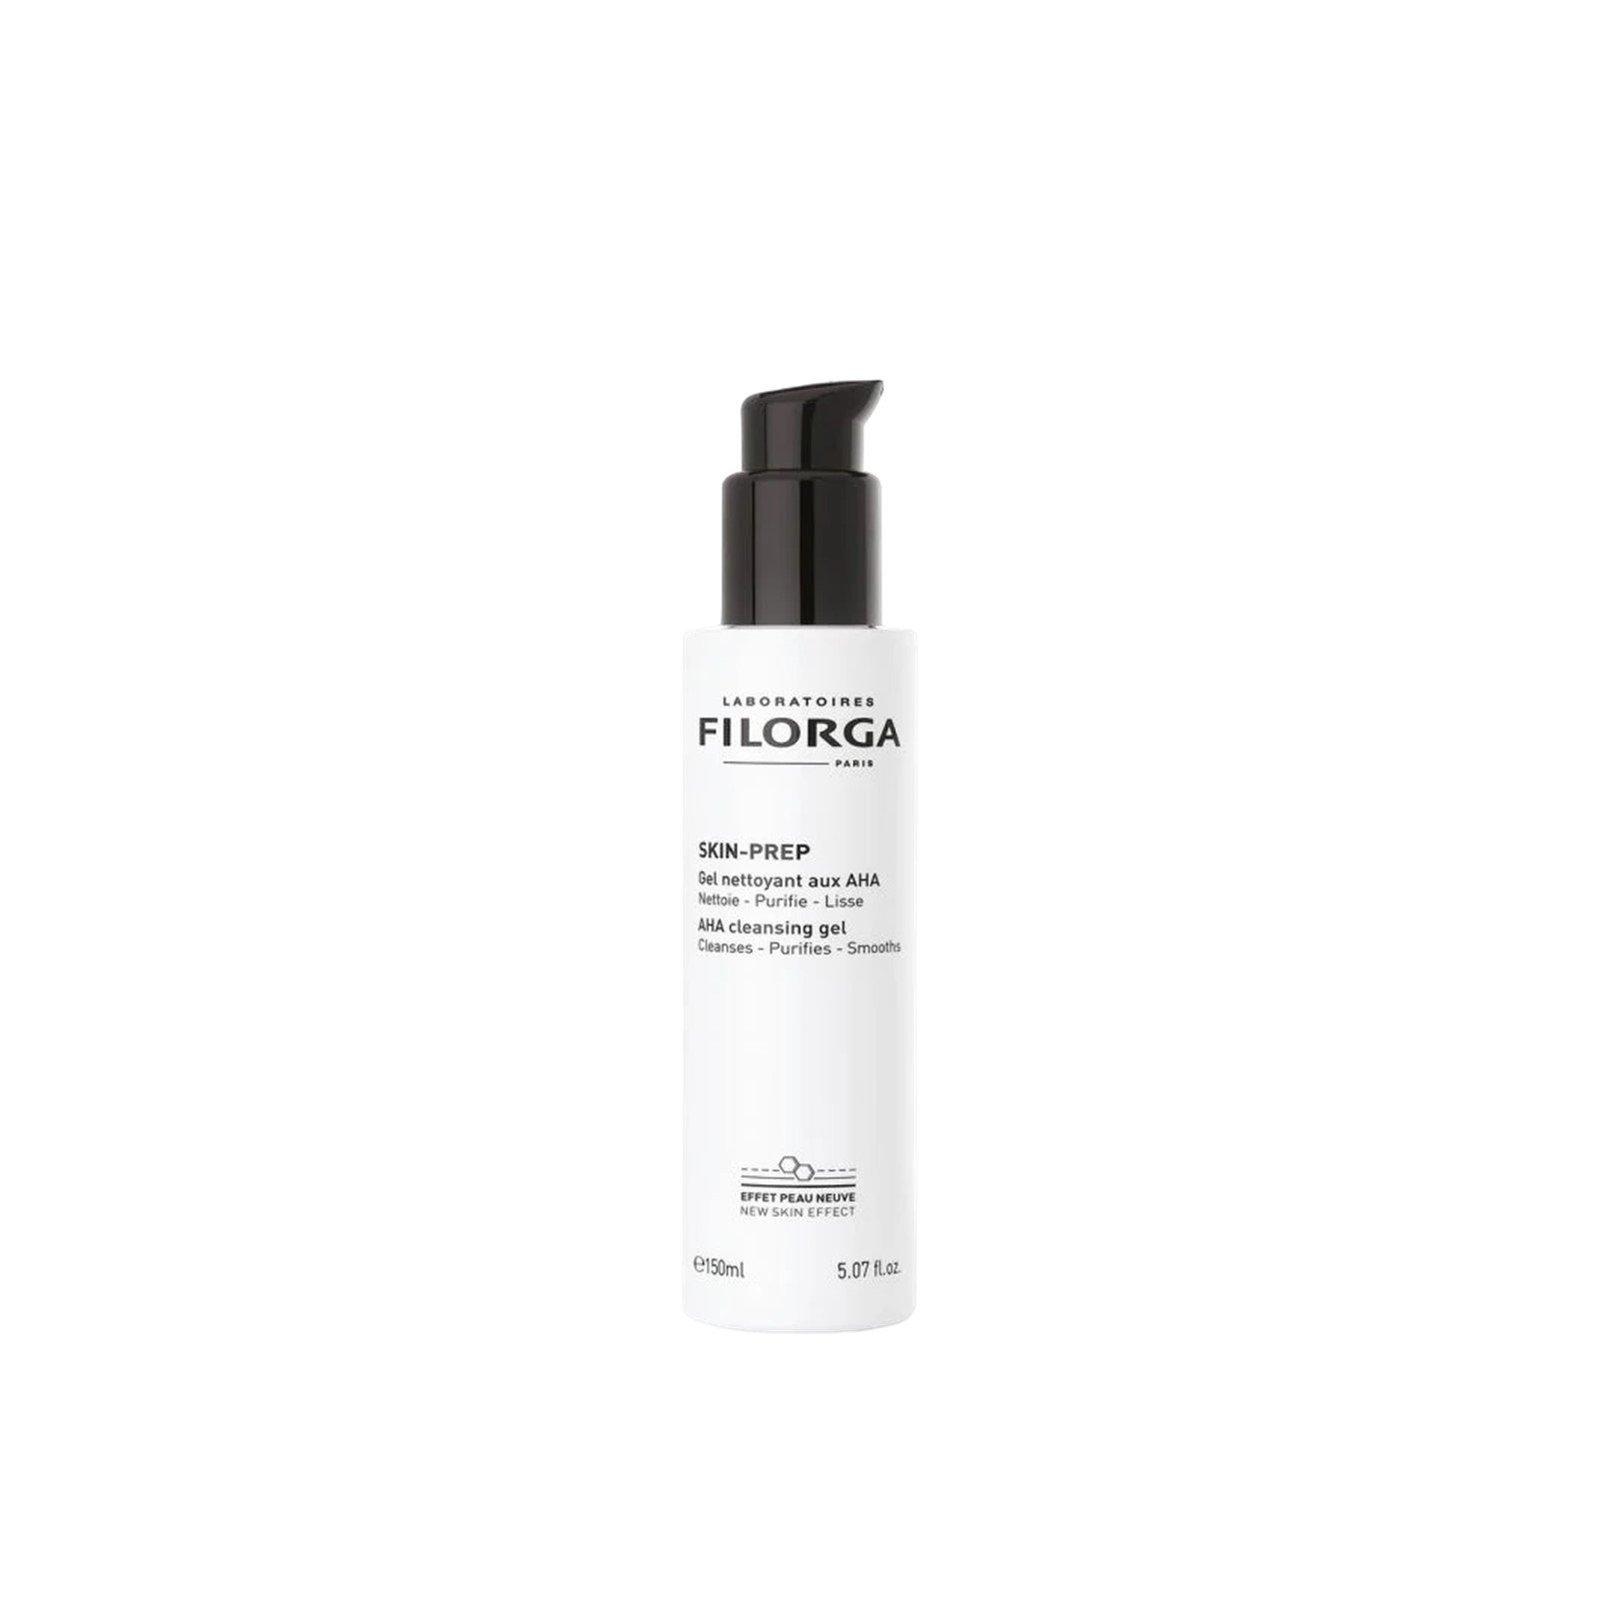 Filorga Skin-Prep AHA Cleansing Gel 150ml (5.07floz)